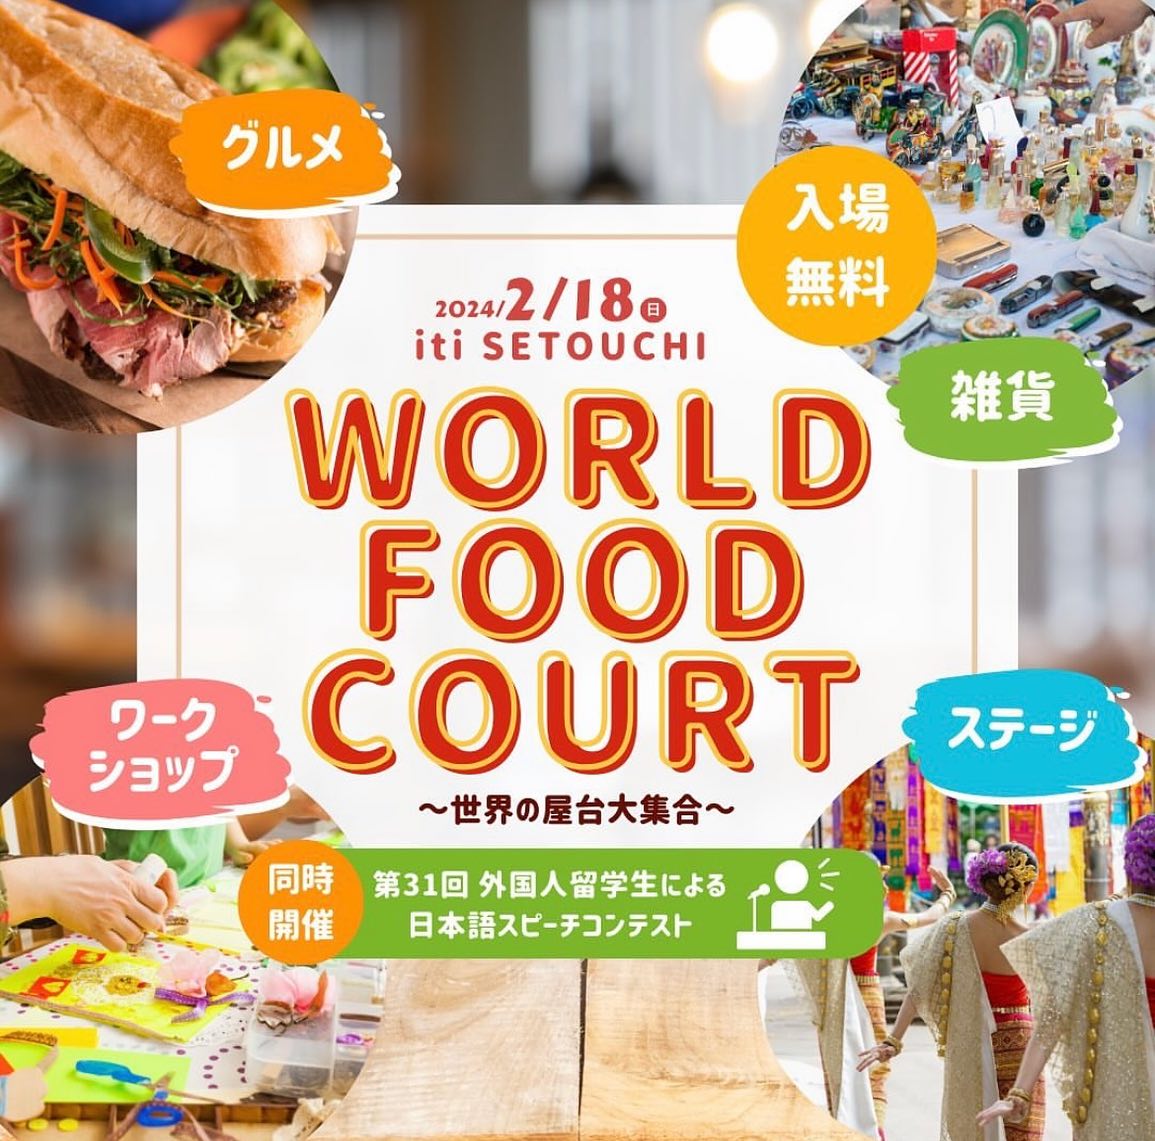 2/18(sun) World Food Court～世界の屋台大集合～